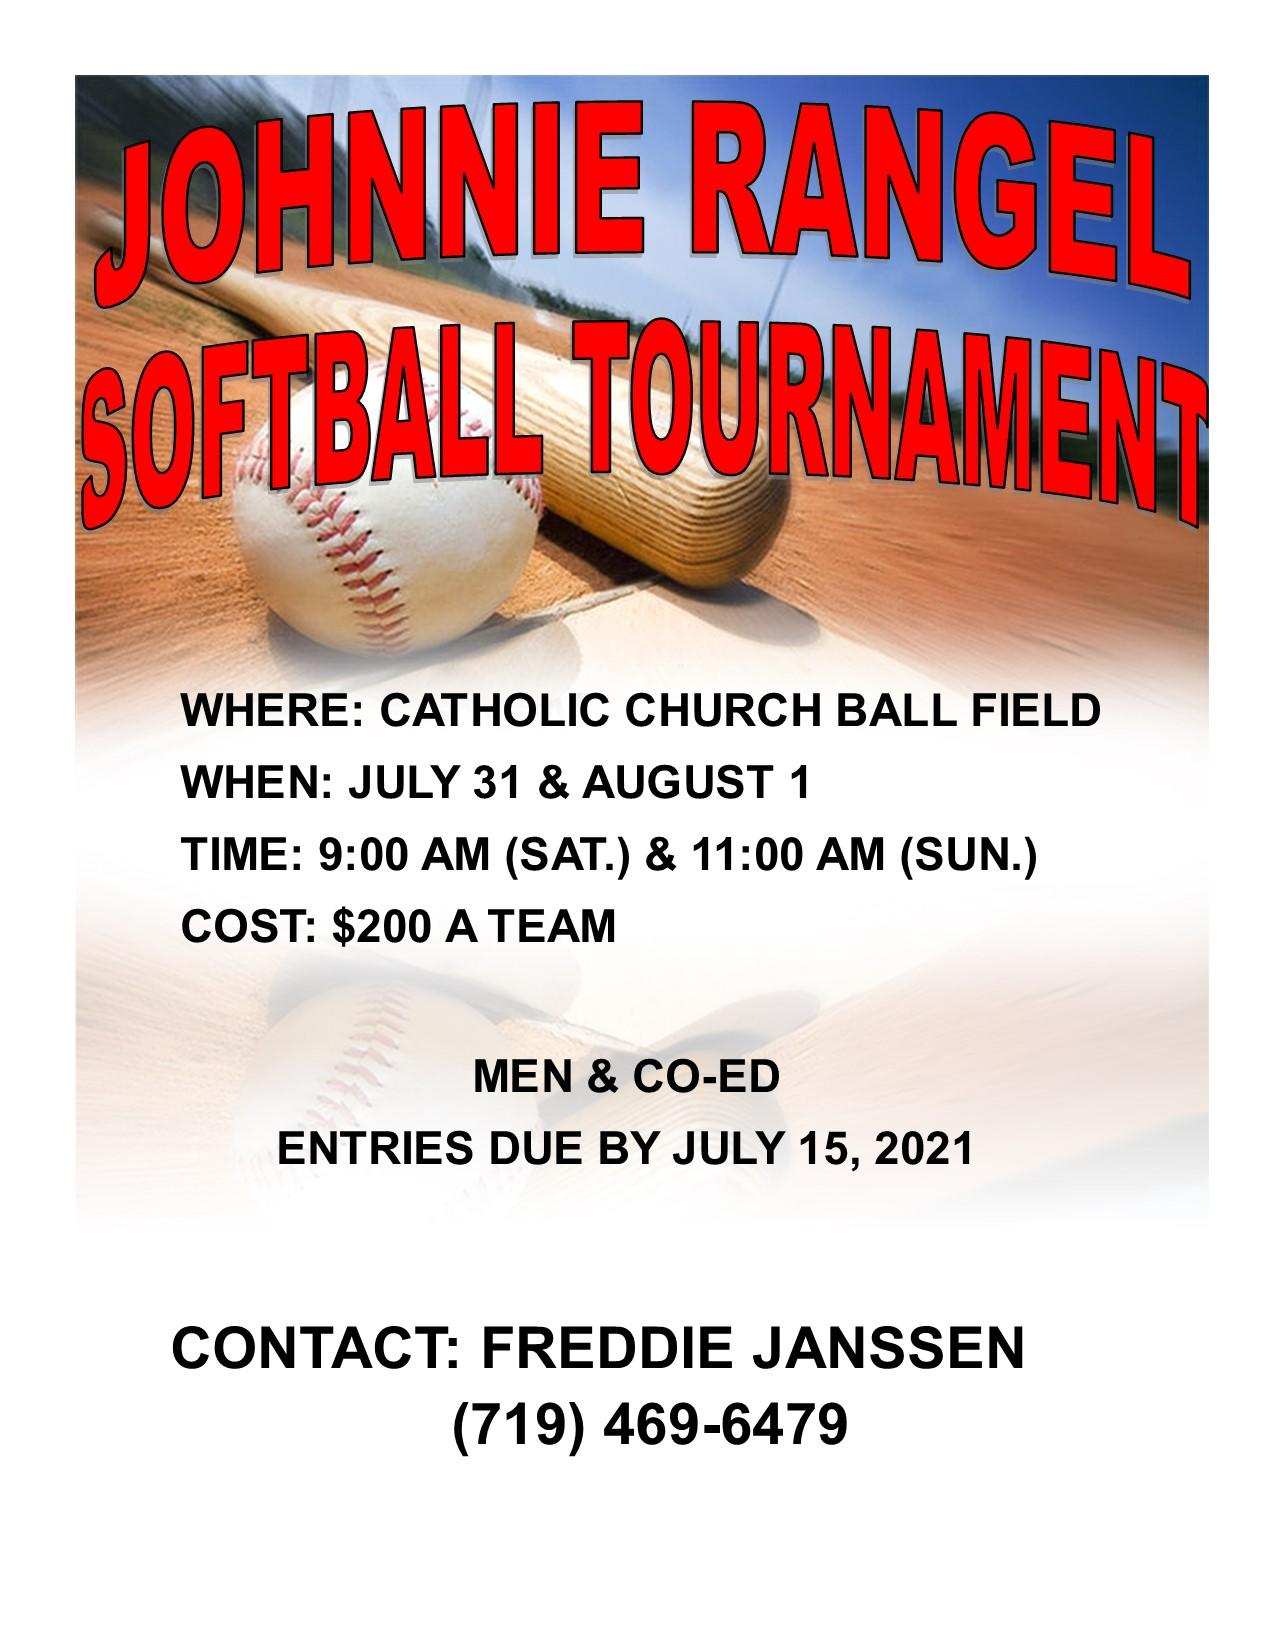 Johnney Rangle Soft Ball Tournament